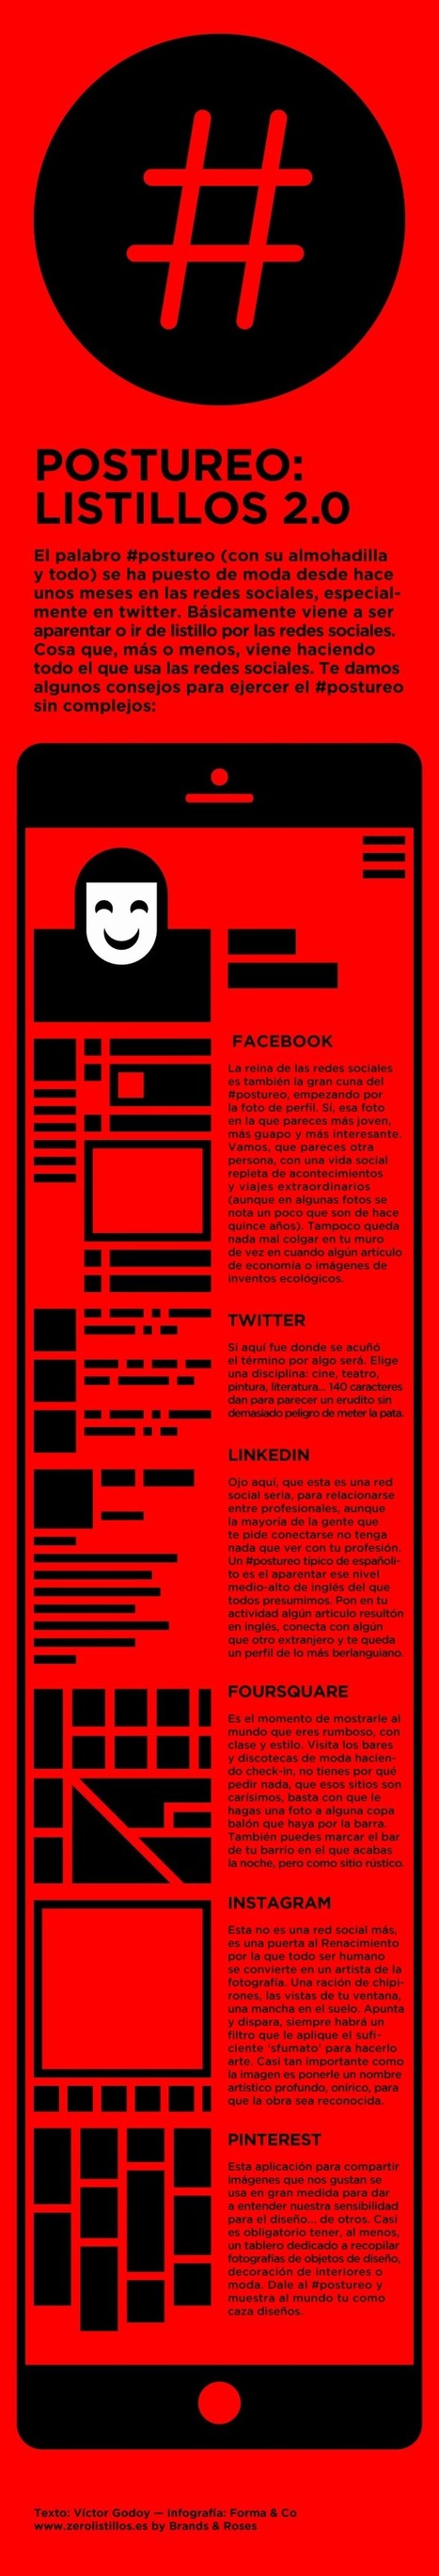 Cómo hacer #postureo en Redes Sociales #infografia #infographic #socialmedia | Seo, Social Media Marketing | Scoop.it